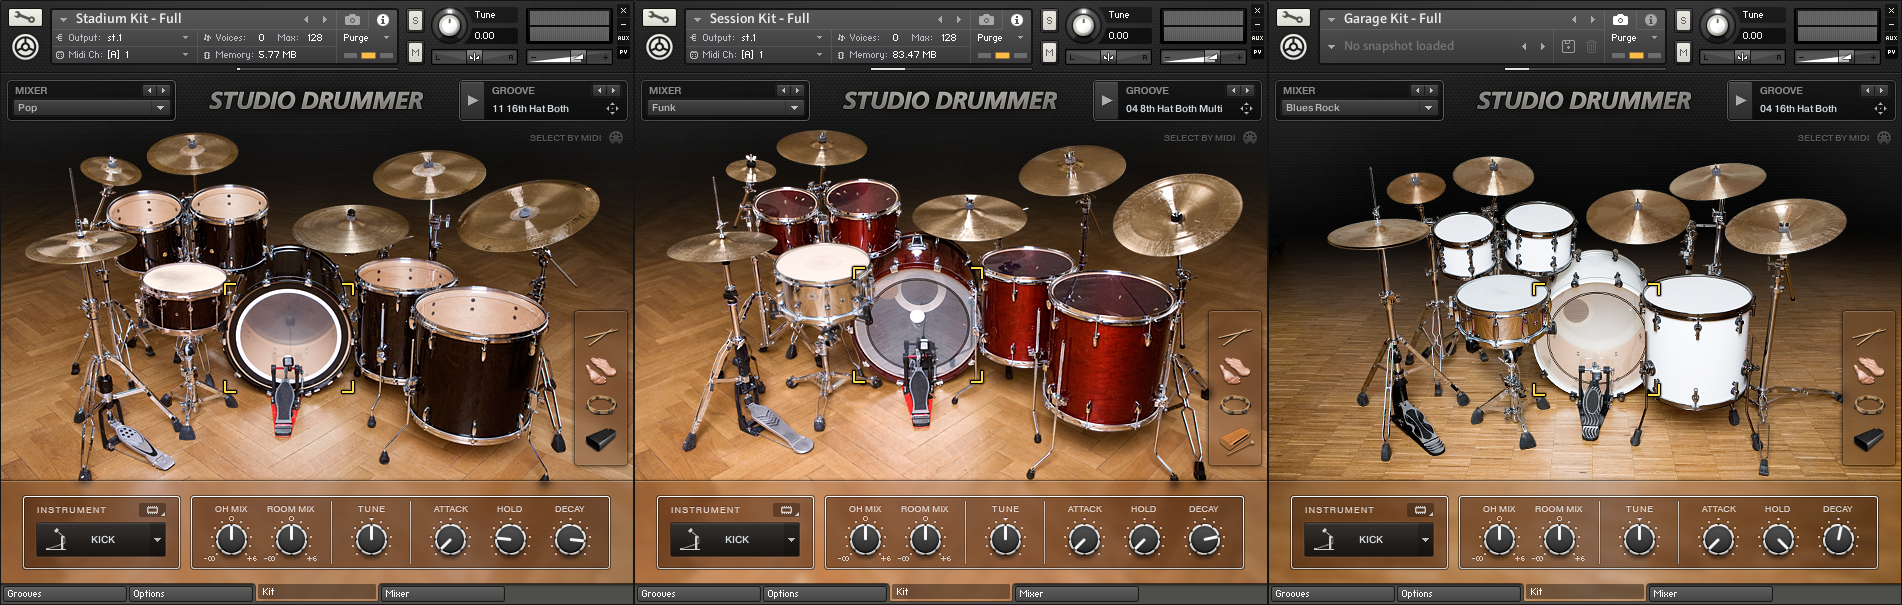 NI Studio Drummer - All 3 Virtual Drum Kits